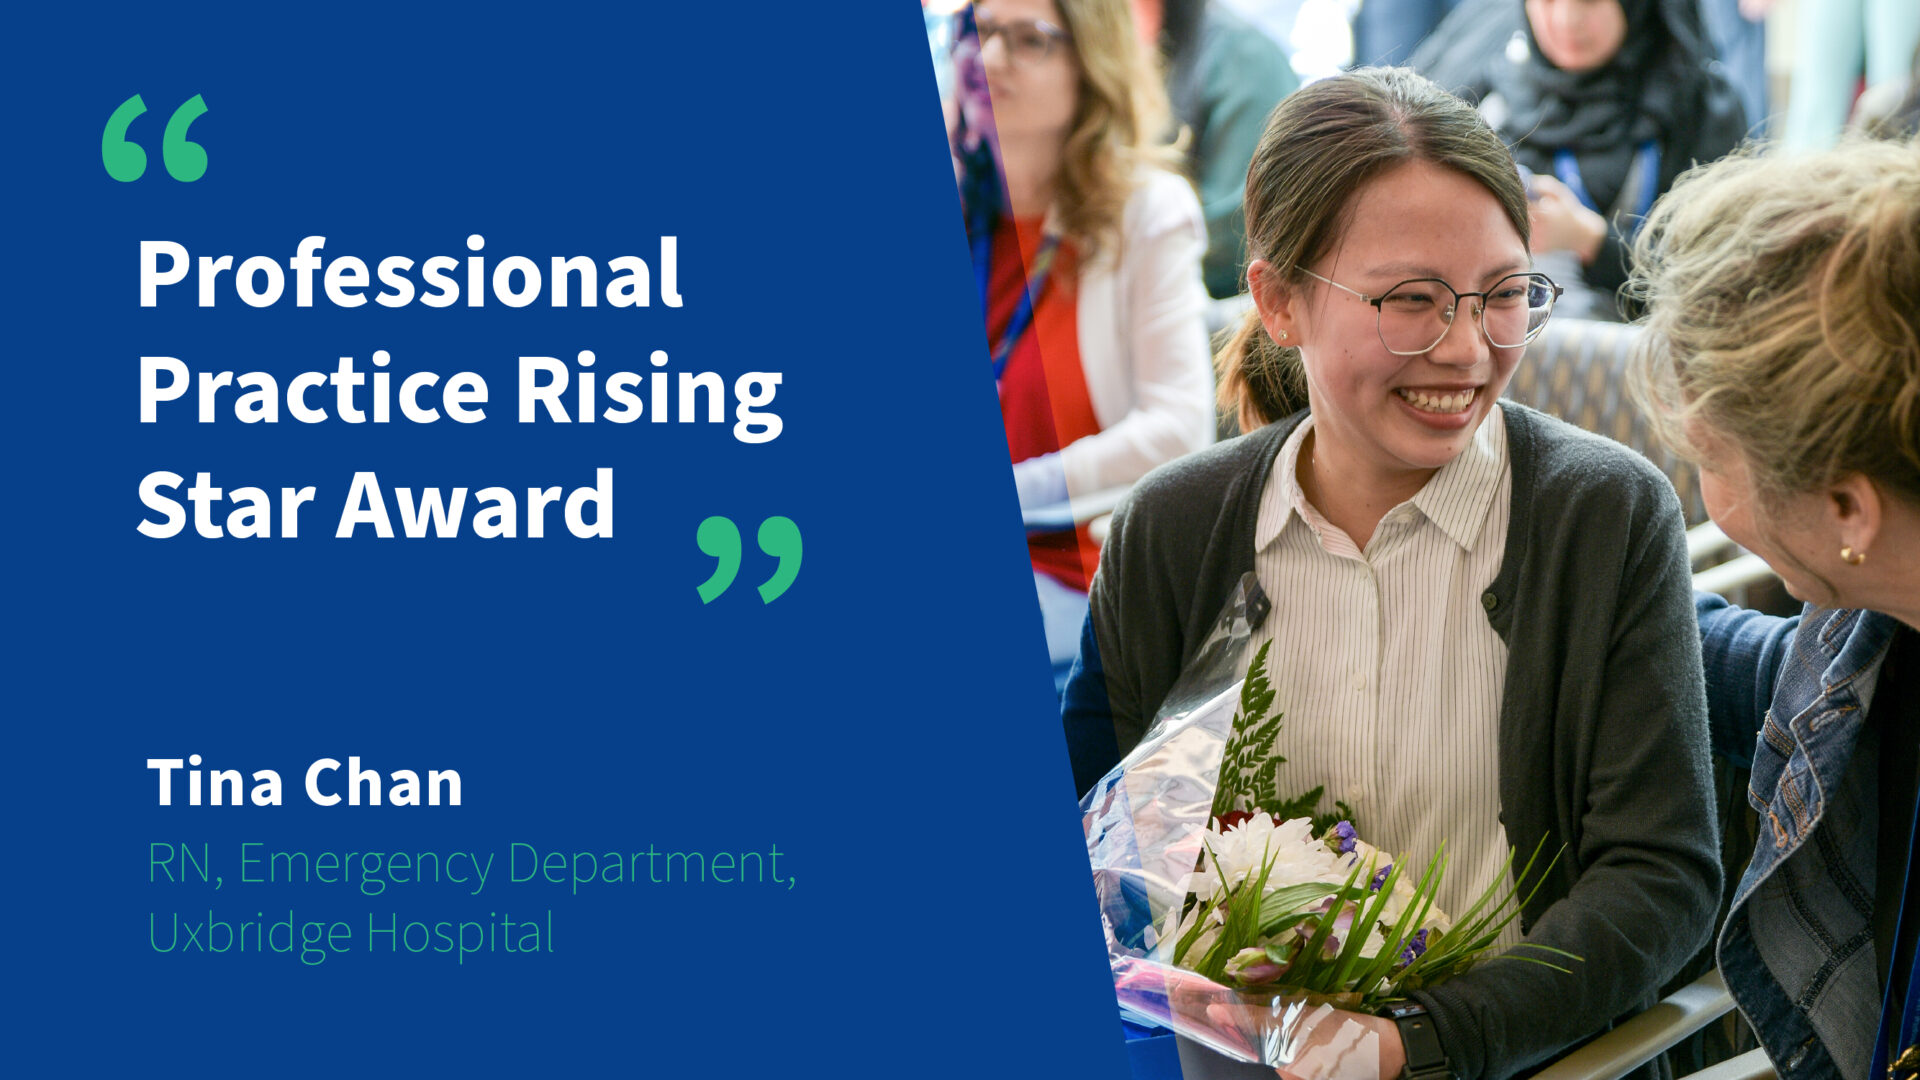 An insert image of Oak Valley Health's nursing week awards winner - Tina Chan - who is, registered nurse of the Emergency Department at Uxbridge Hospital